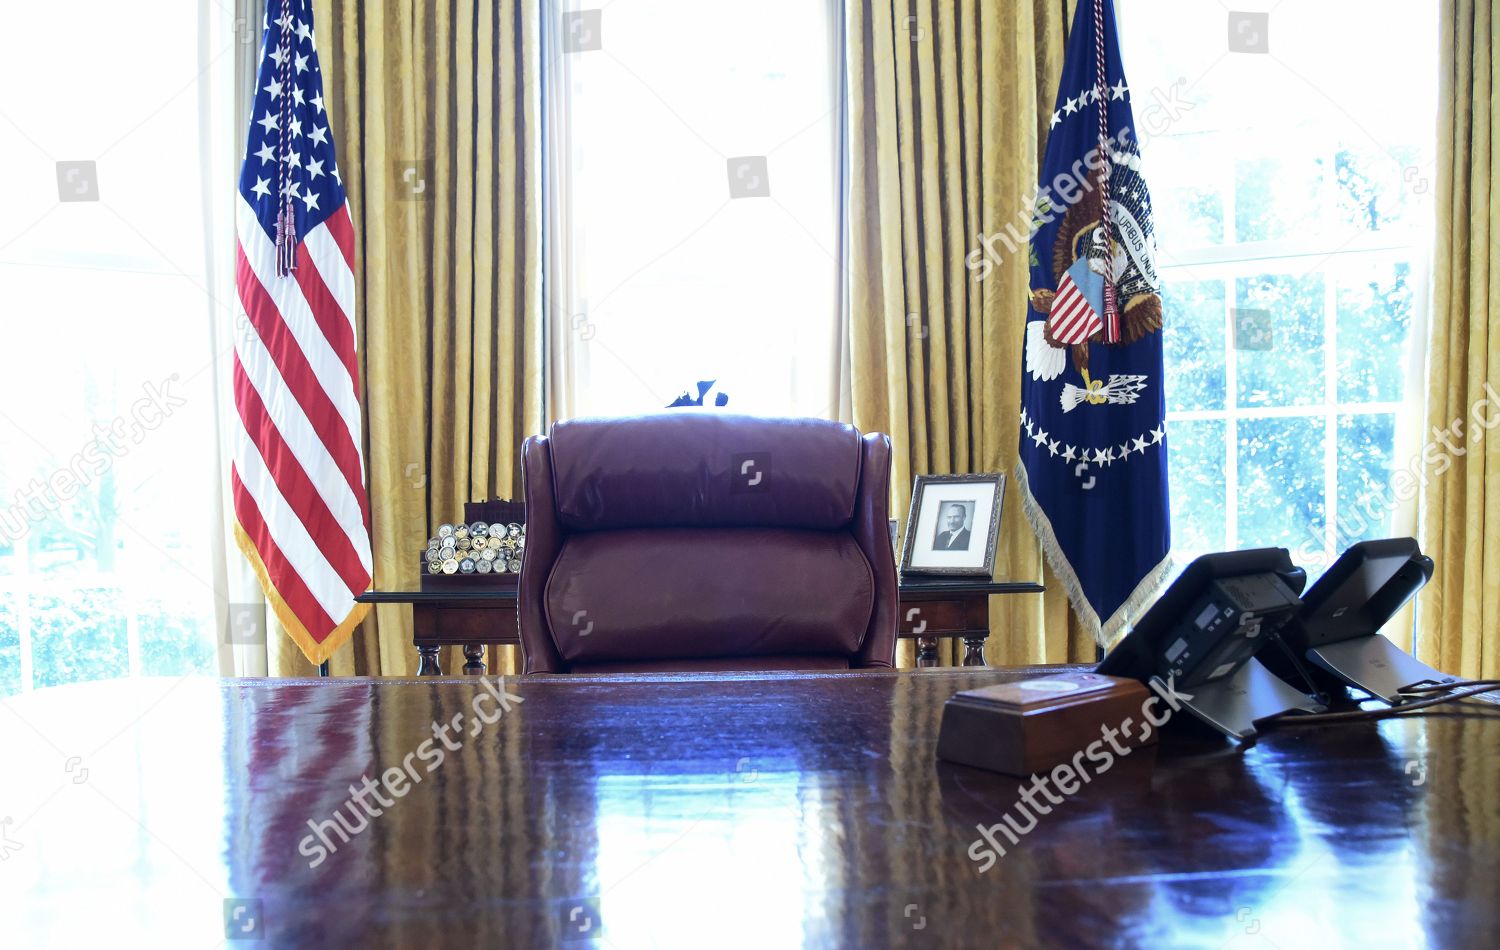 Resolute Desk Oval Office White House Washington Editorial Stock